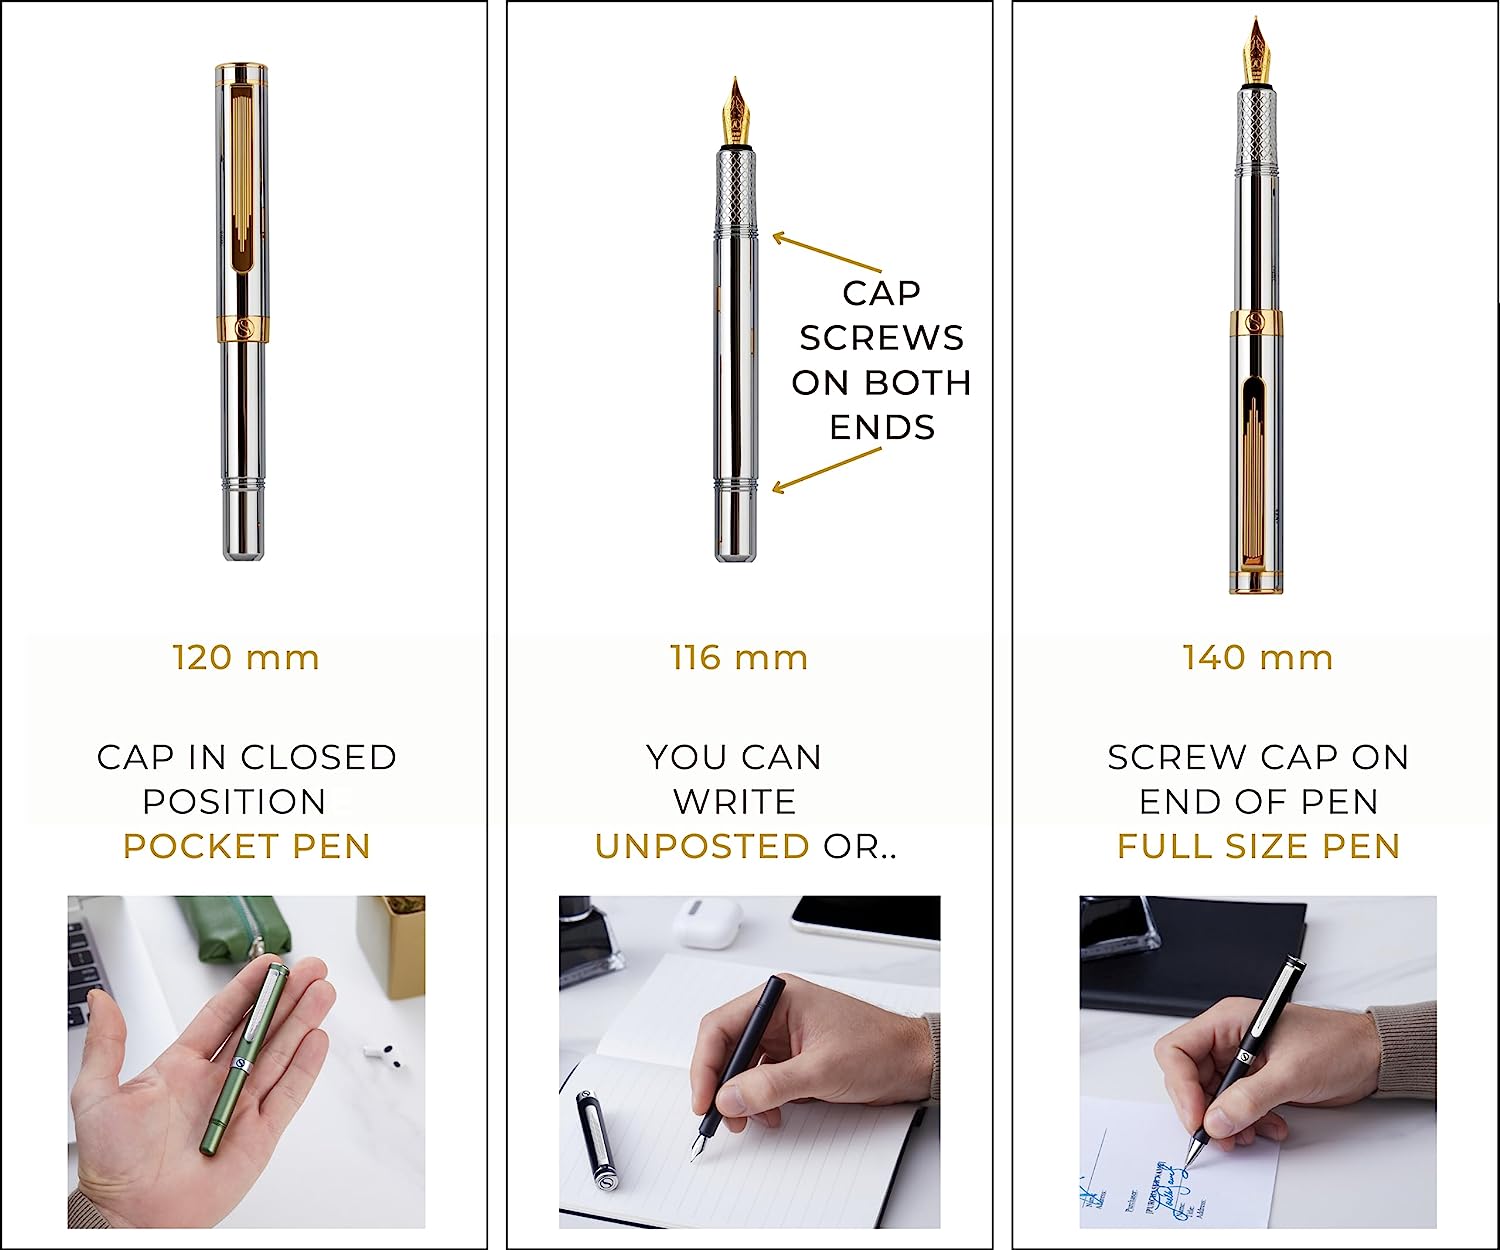 Scriveiner Silver Chrome Fountain Pen (Medium), Award Winning Luxury Pen, Heavy Pocket Pen, Chrome Finish